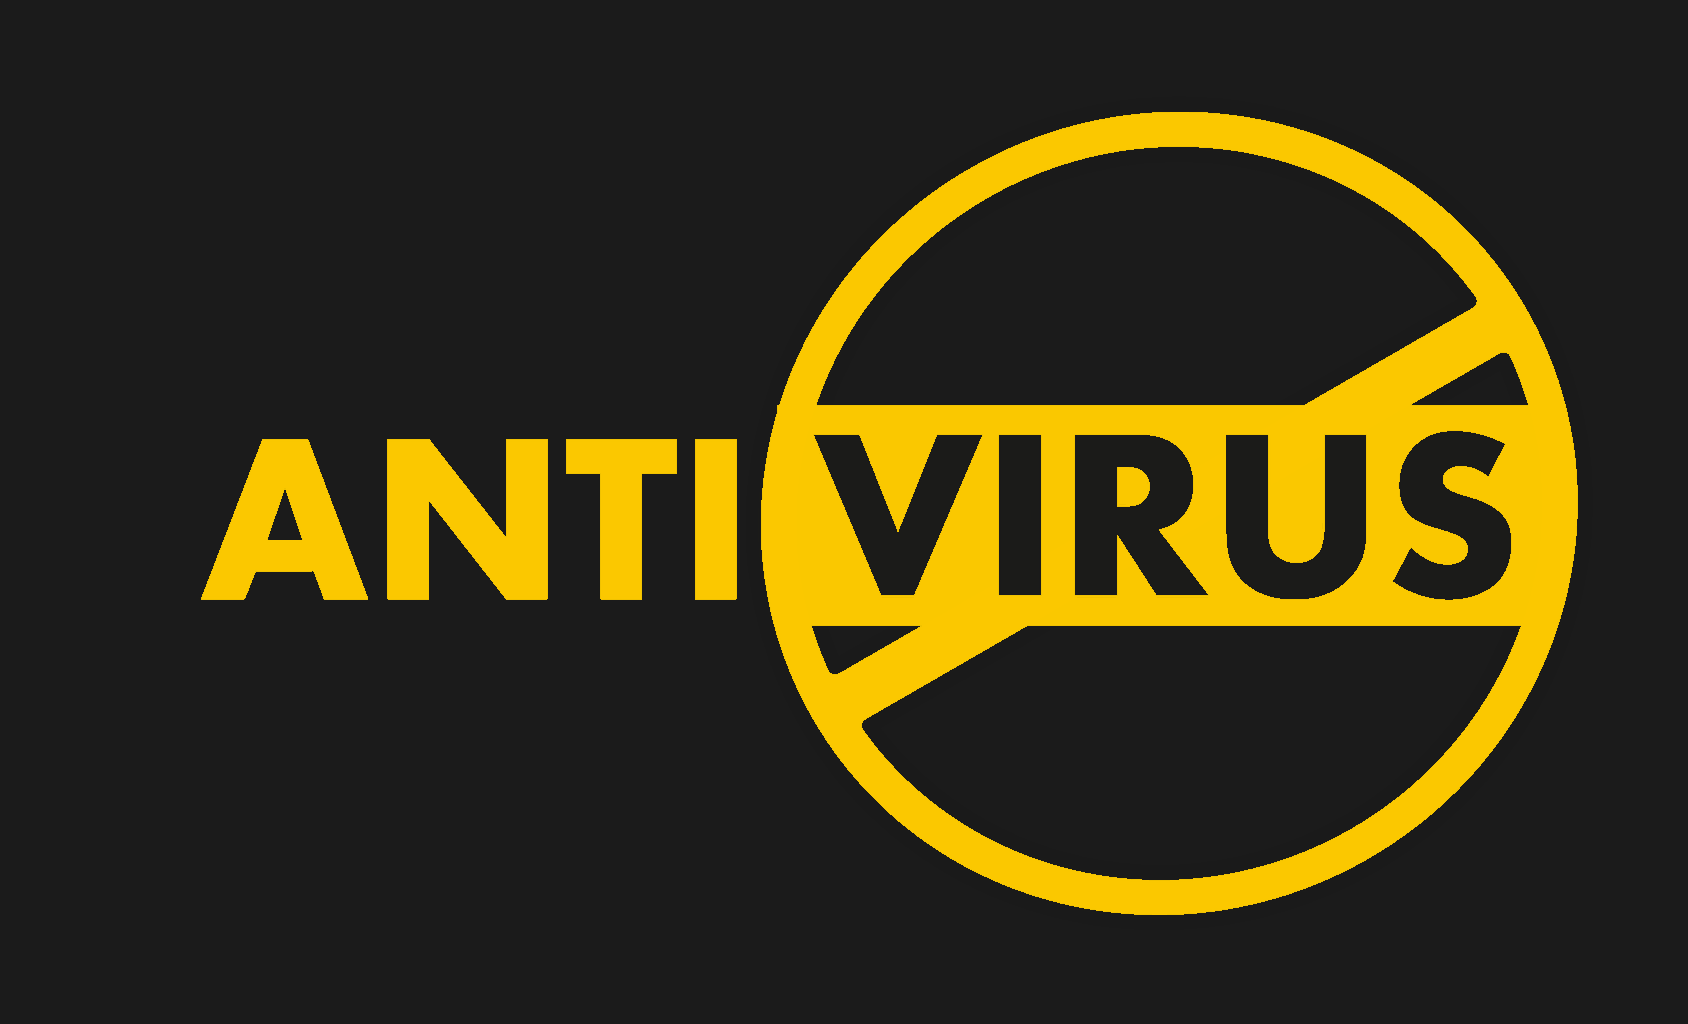 antivirus blokkering systeemherstel